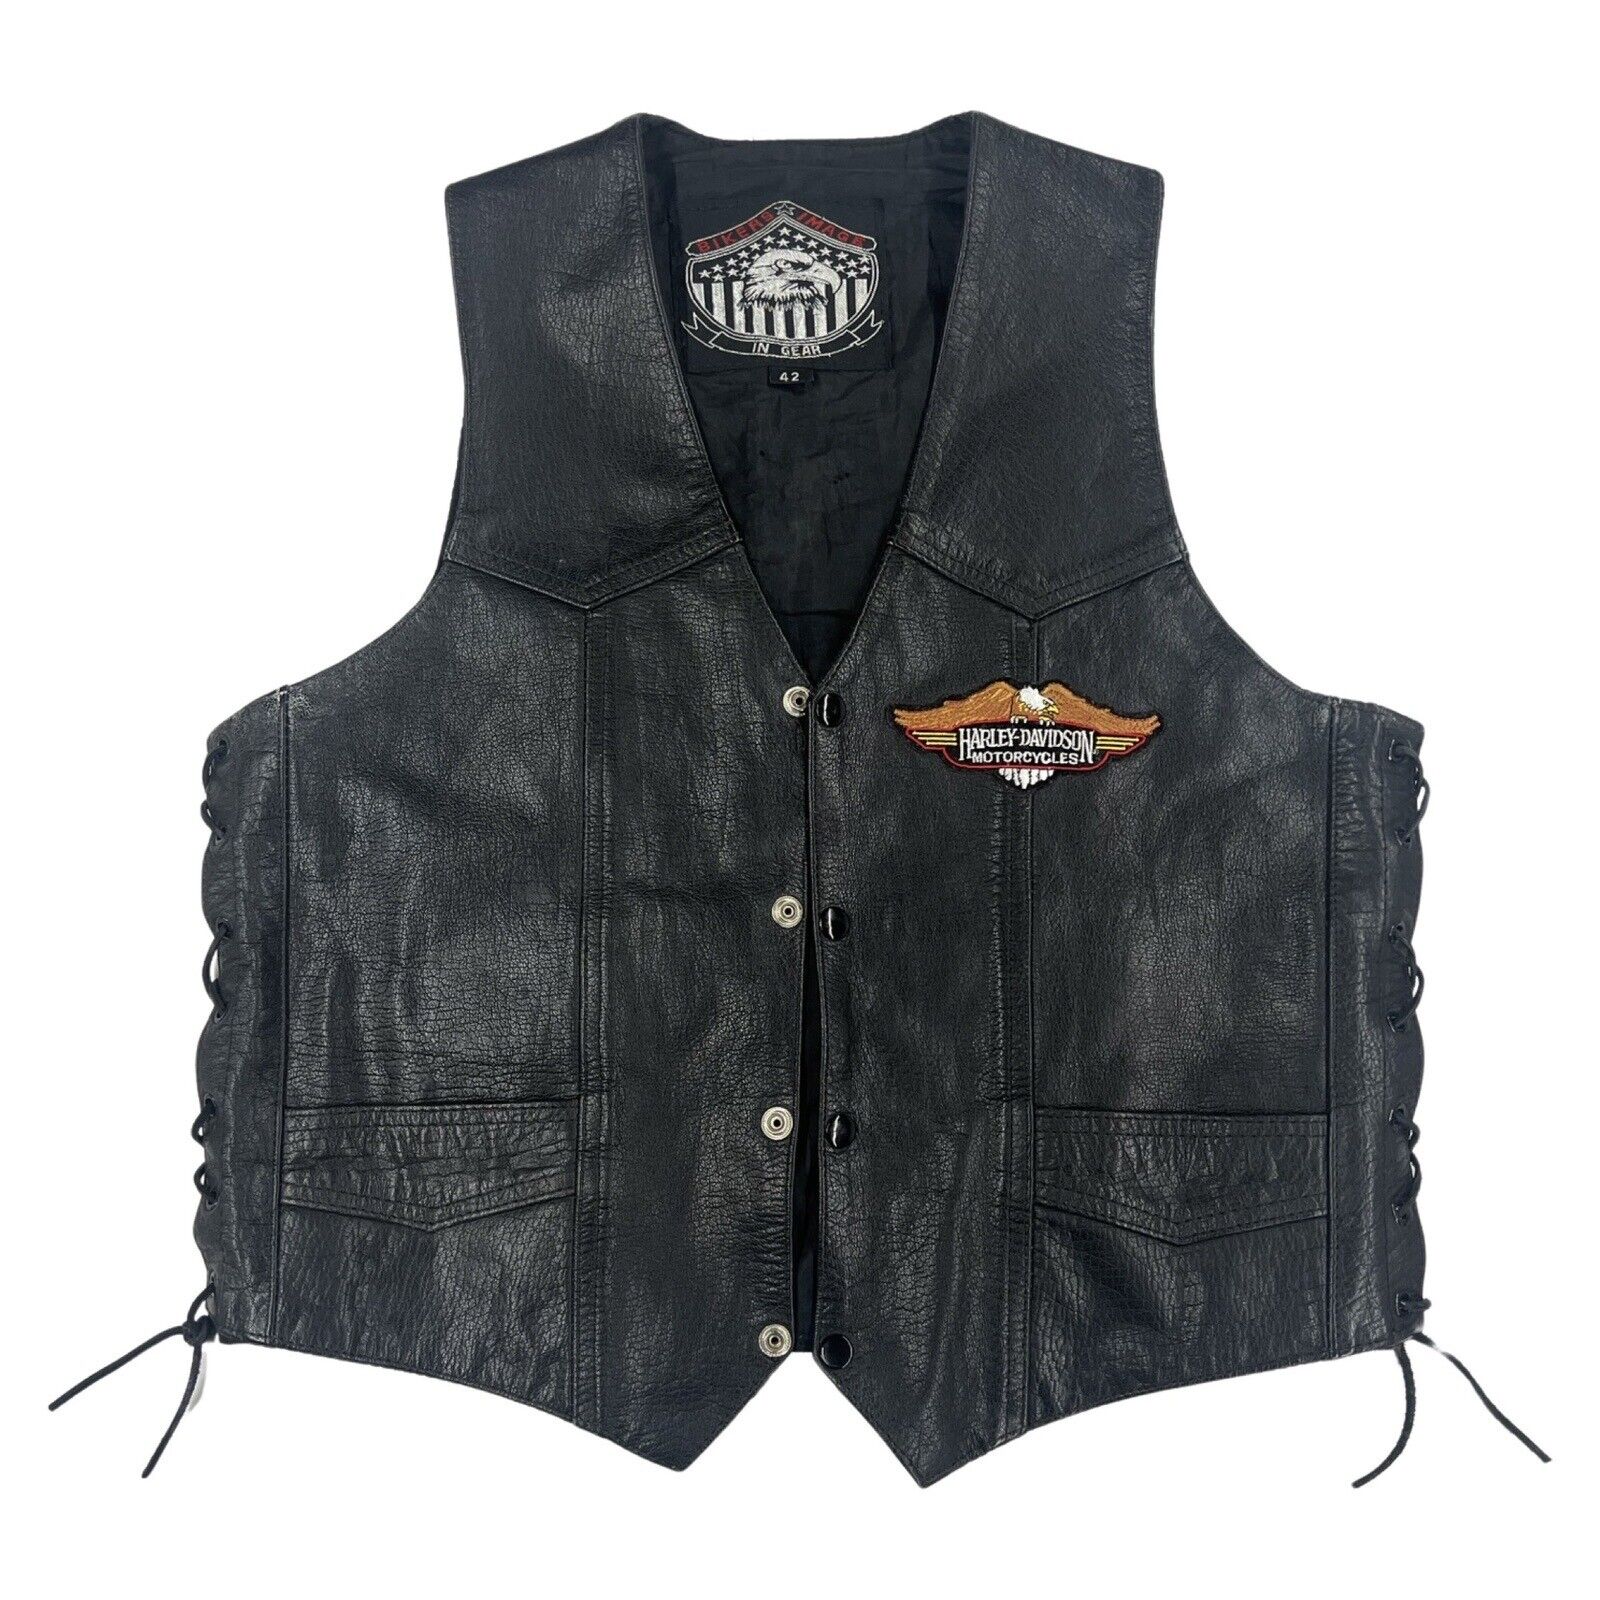 Vintage Harley Davidson Bikers Black Leather Vest Lace Up Patches Men’s Size 42